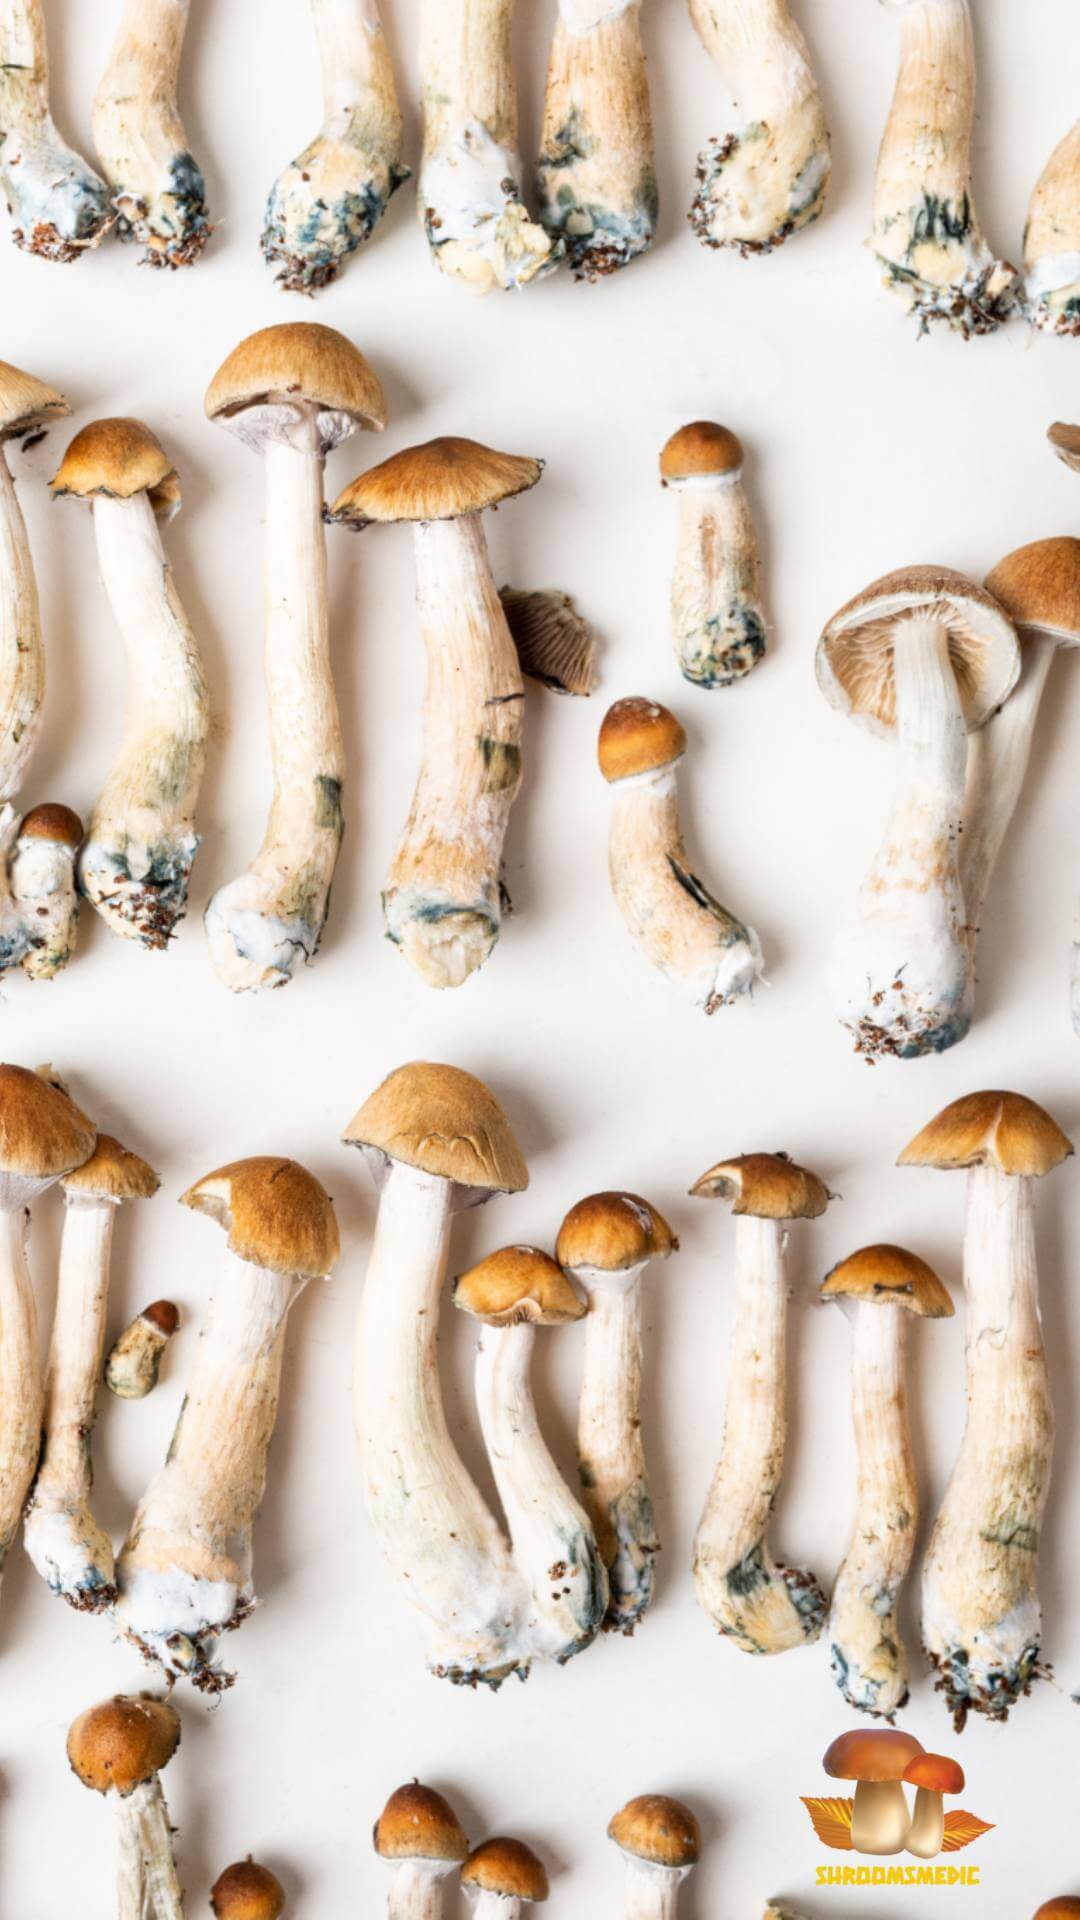 Dried Magic shrooms for sale at mushroom medication